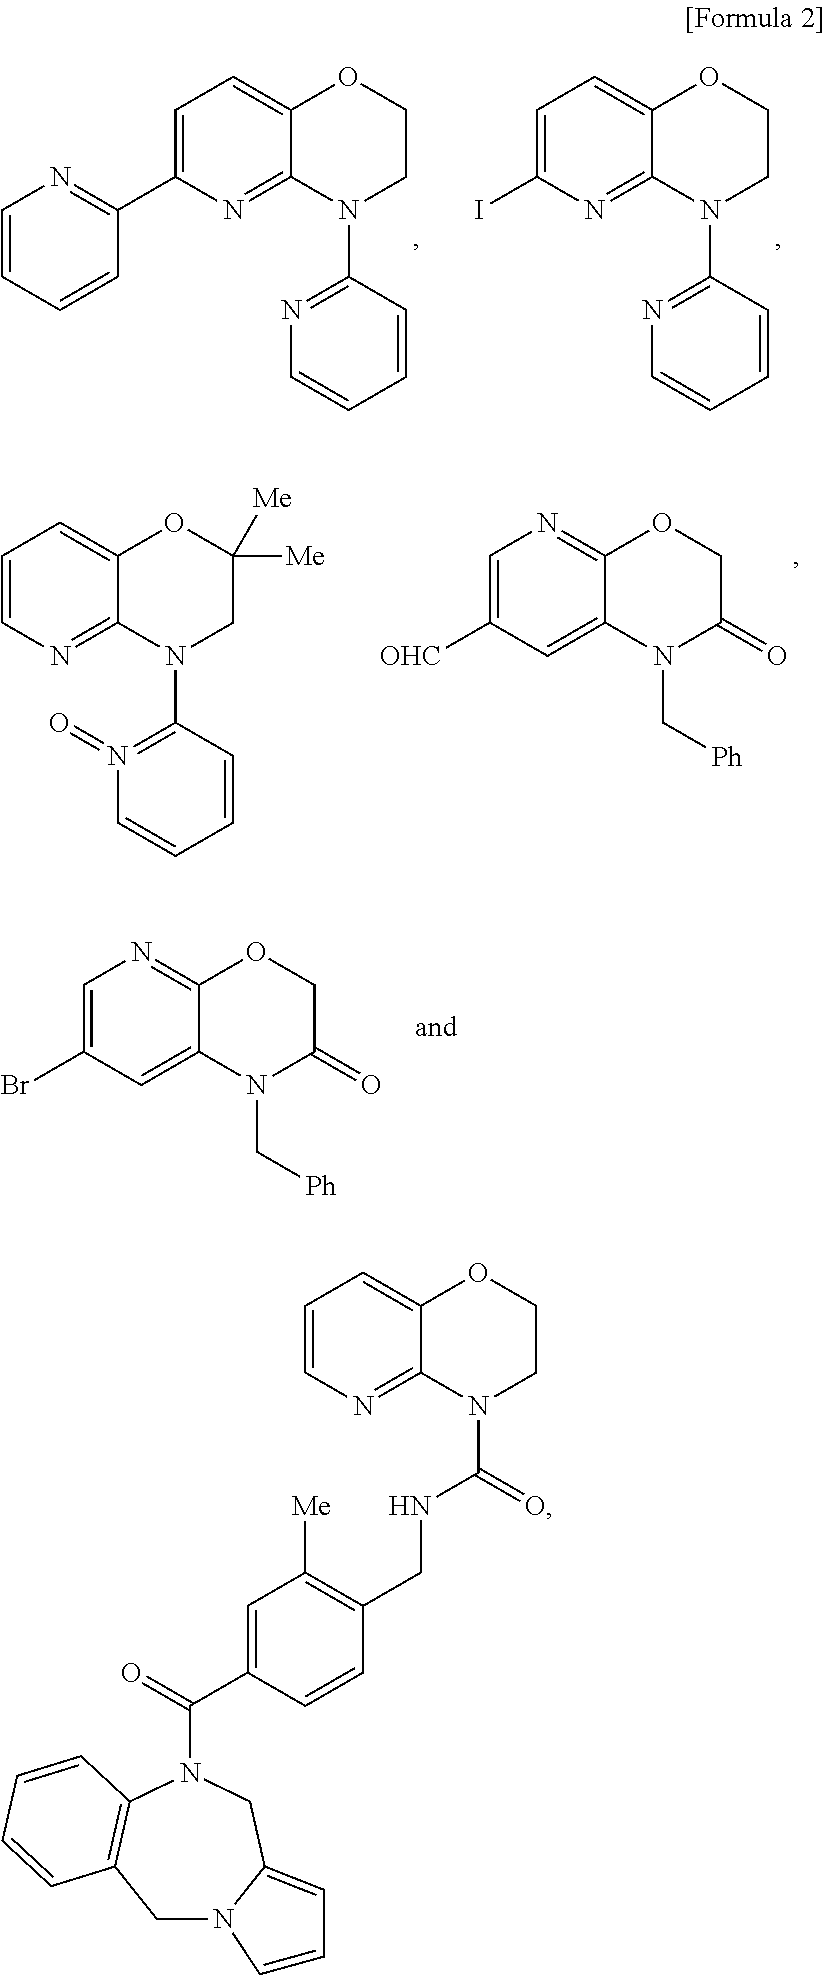 Ring-fused morpholine derivative having pi3k-inhibiting activity